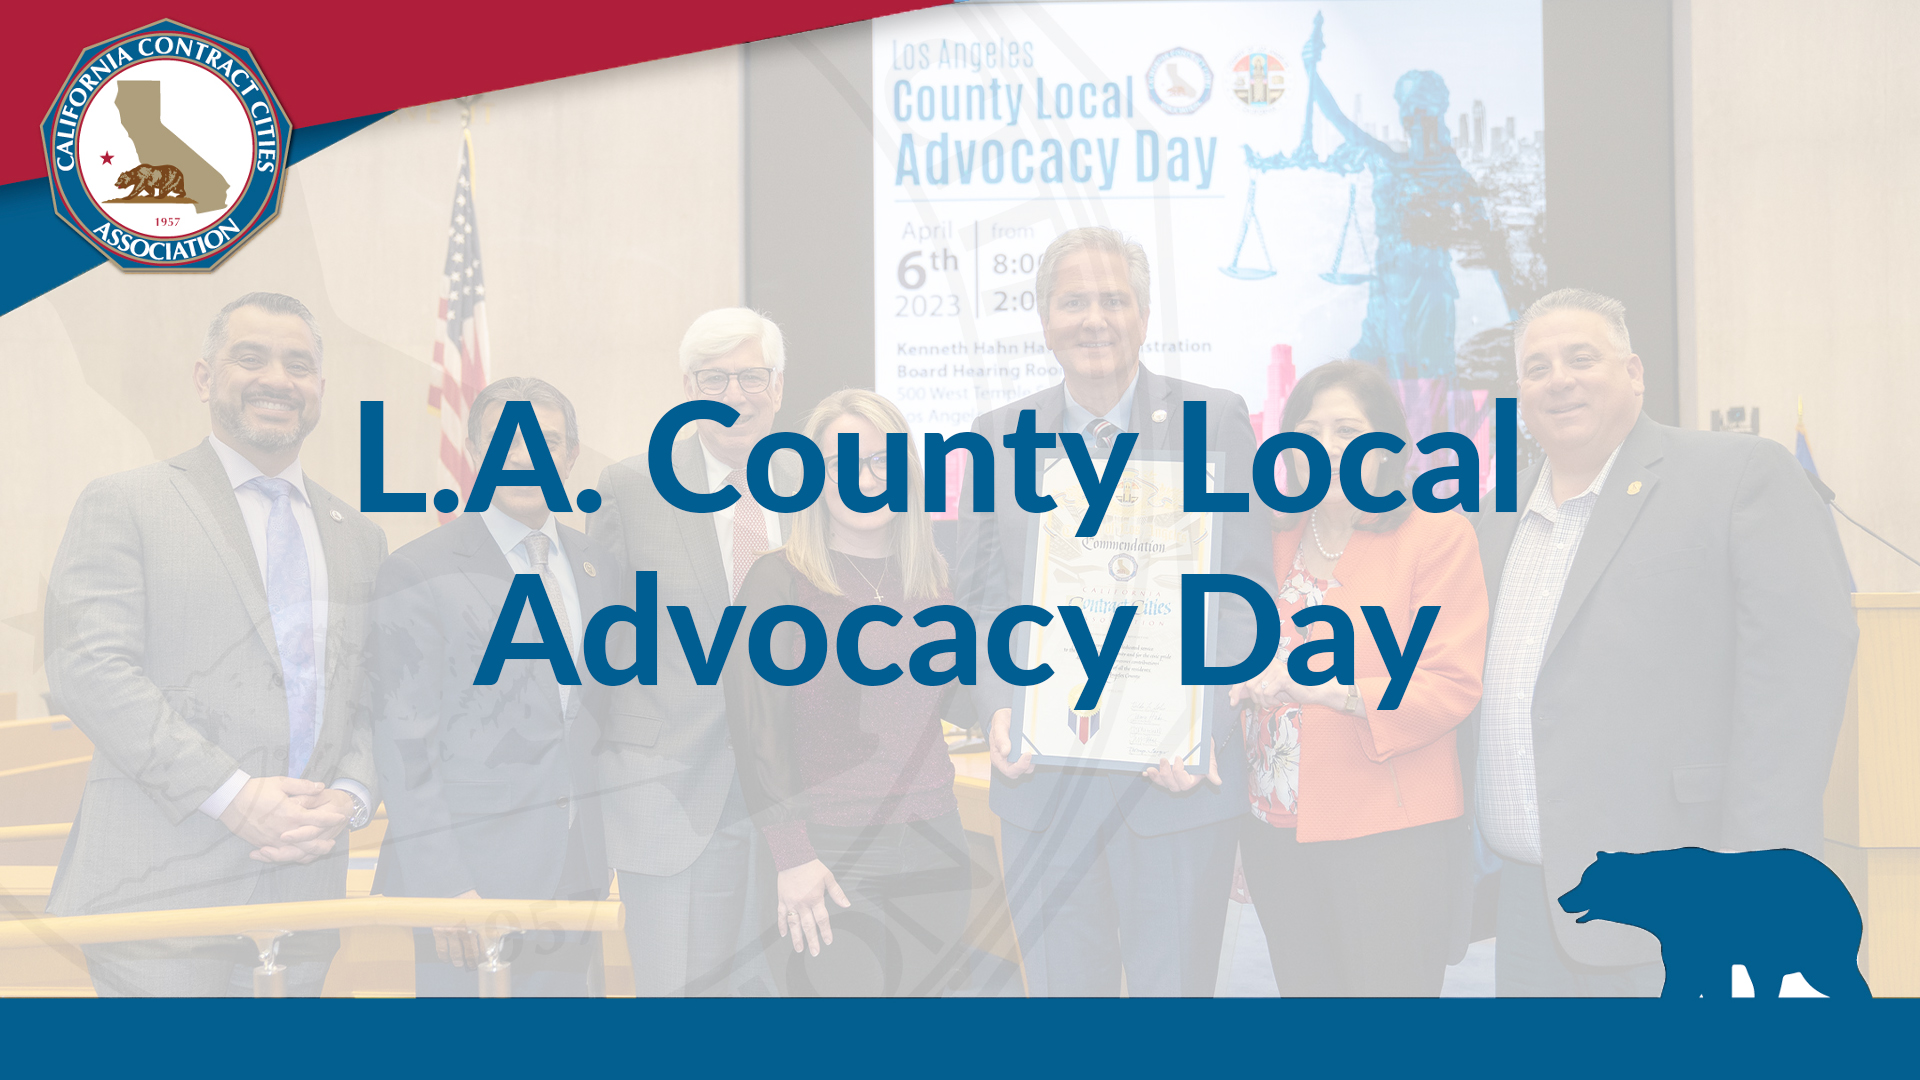 L.A. County Local Advocacy Day